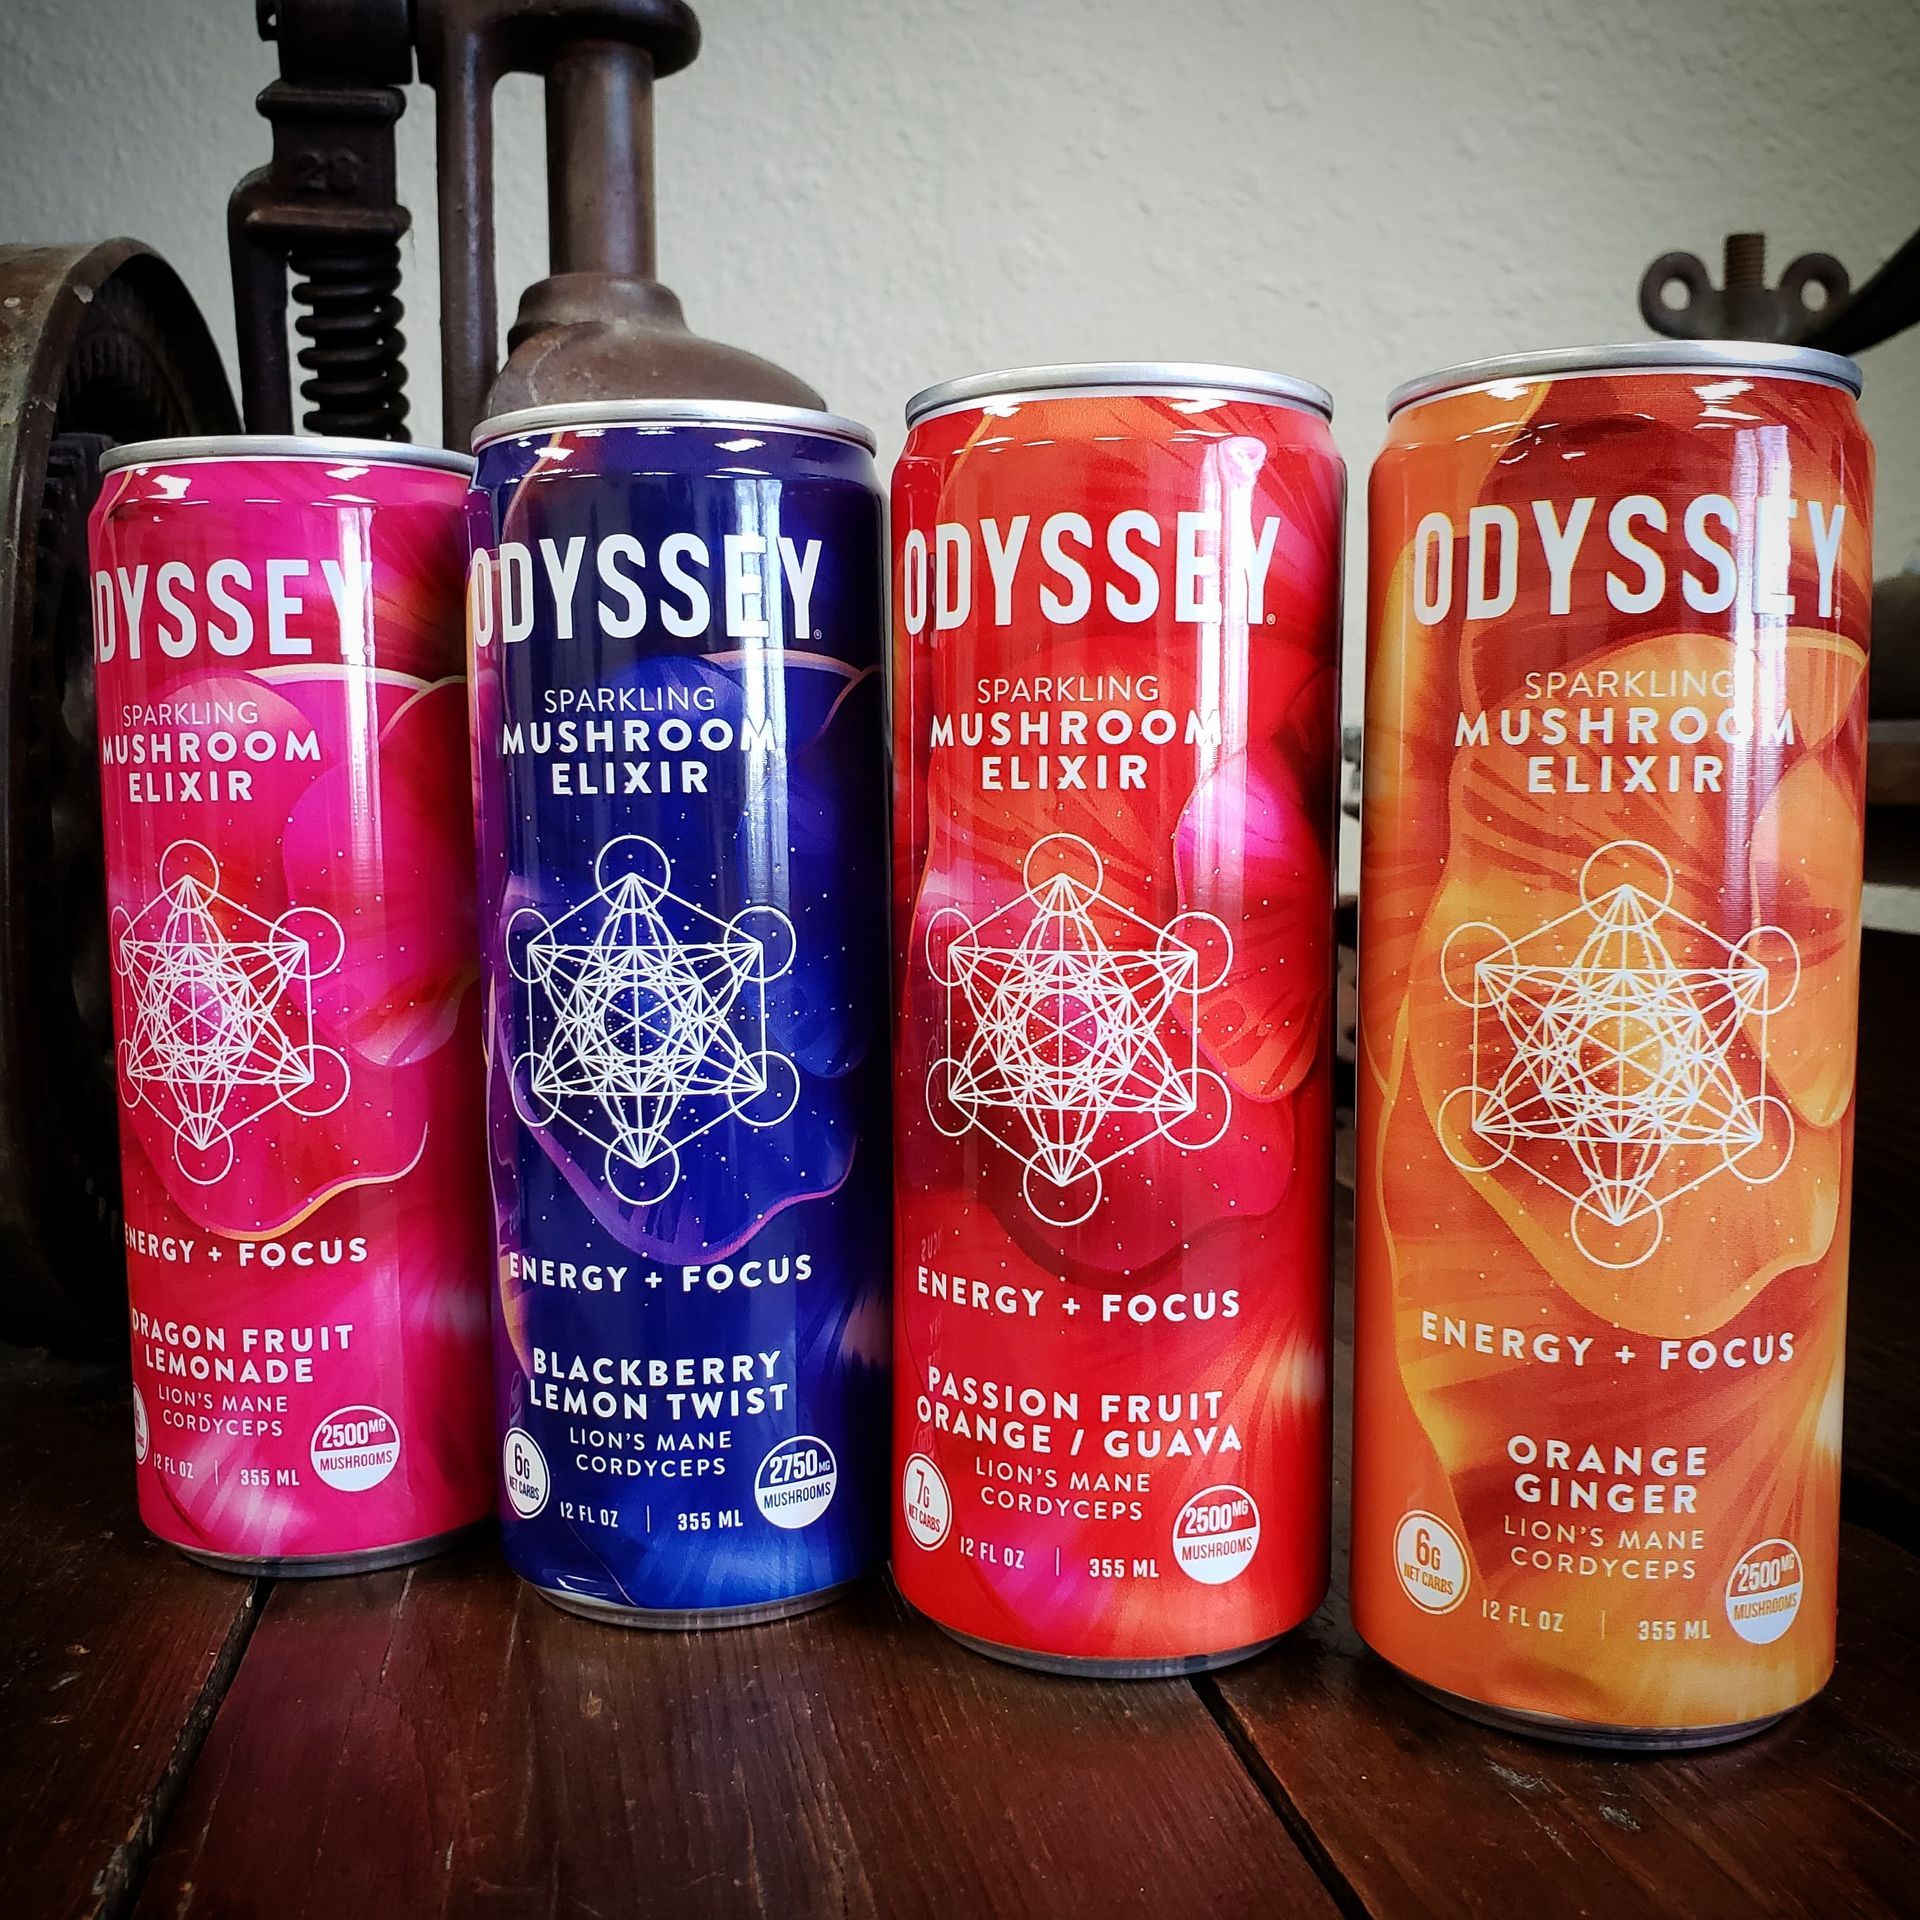 Odyssey Mushroom Elixir at Rustic Oils